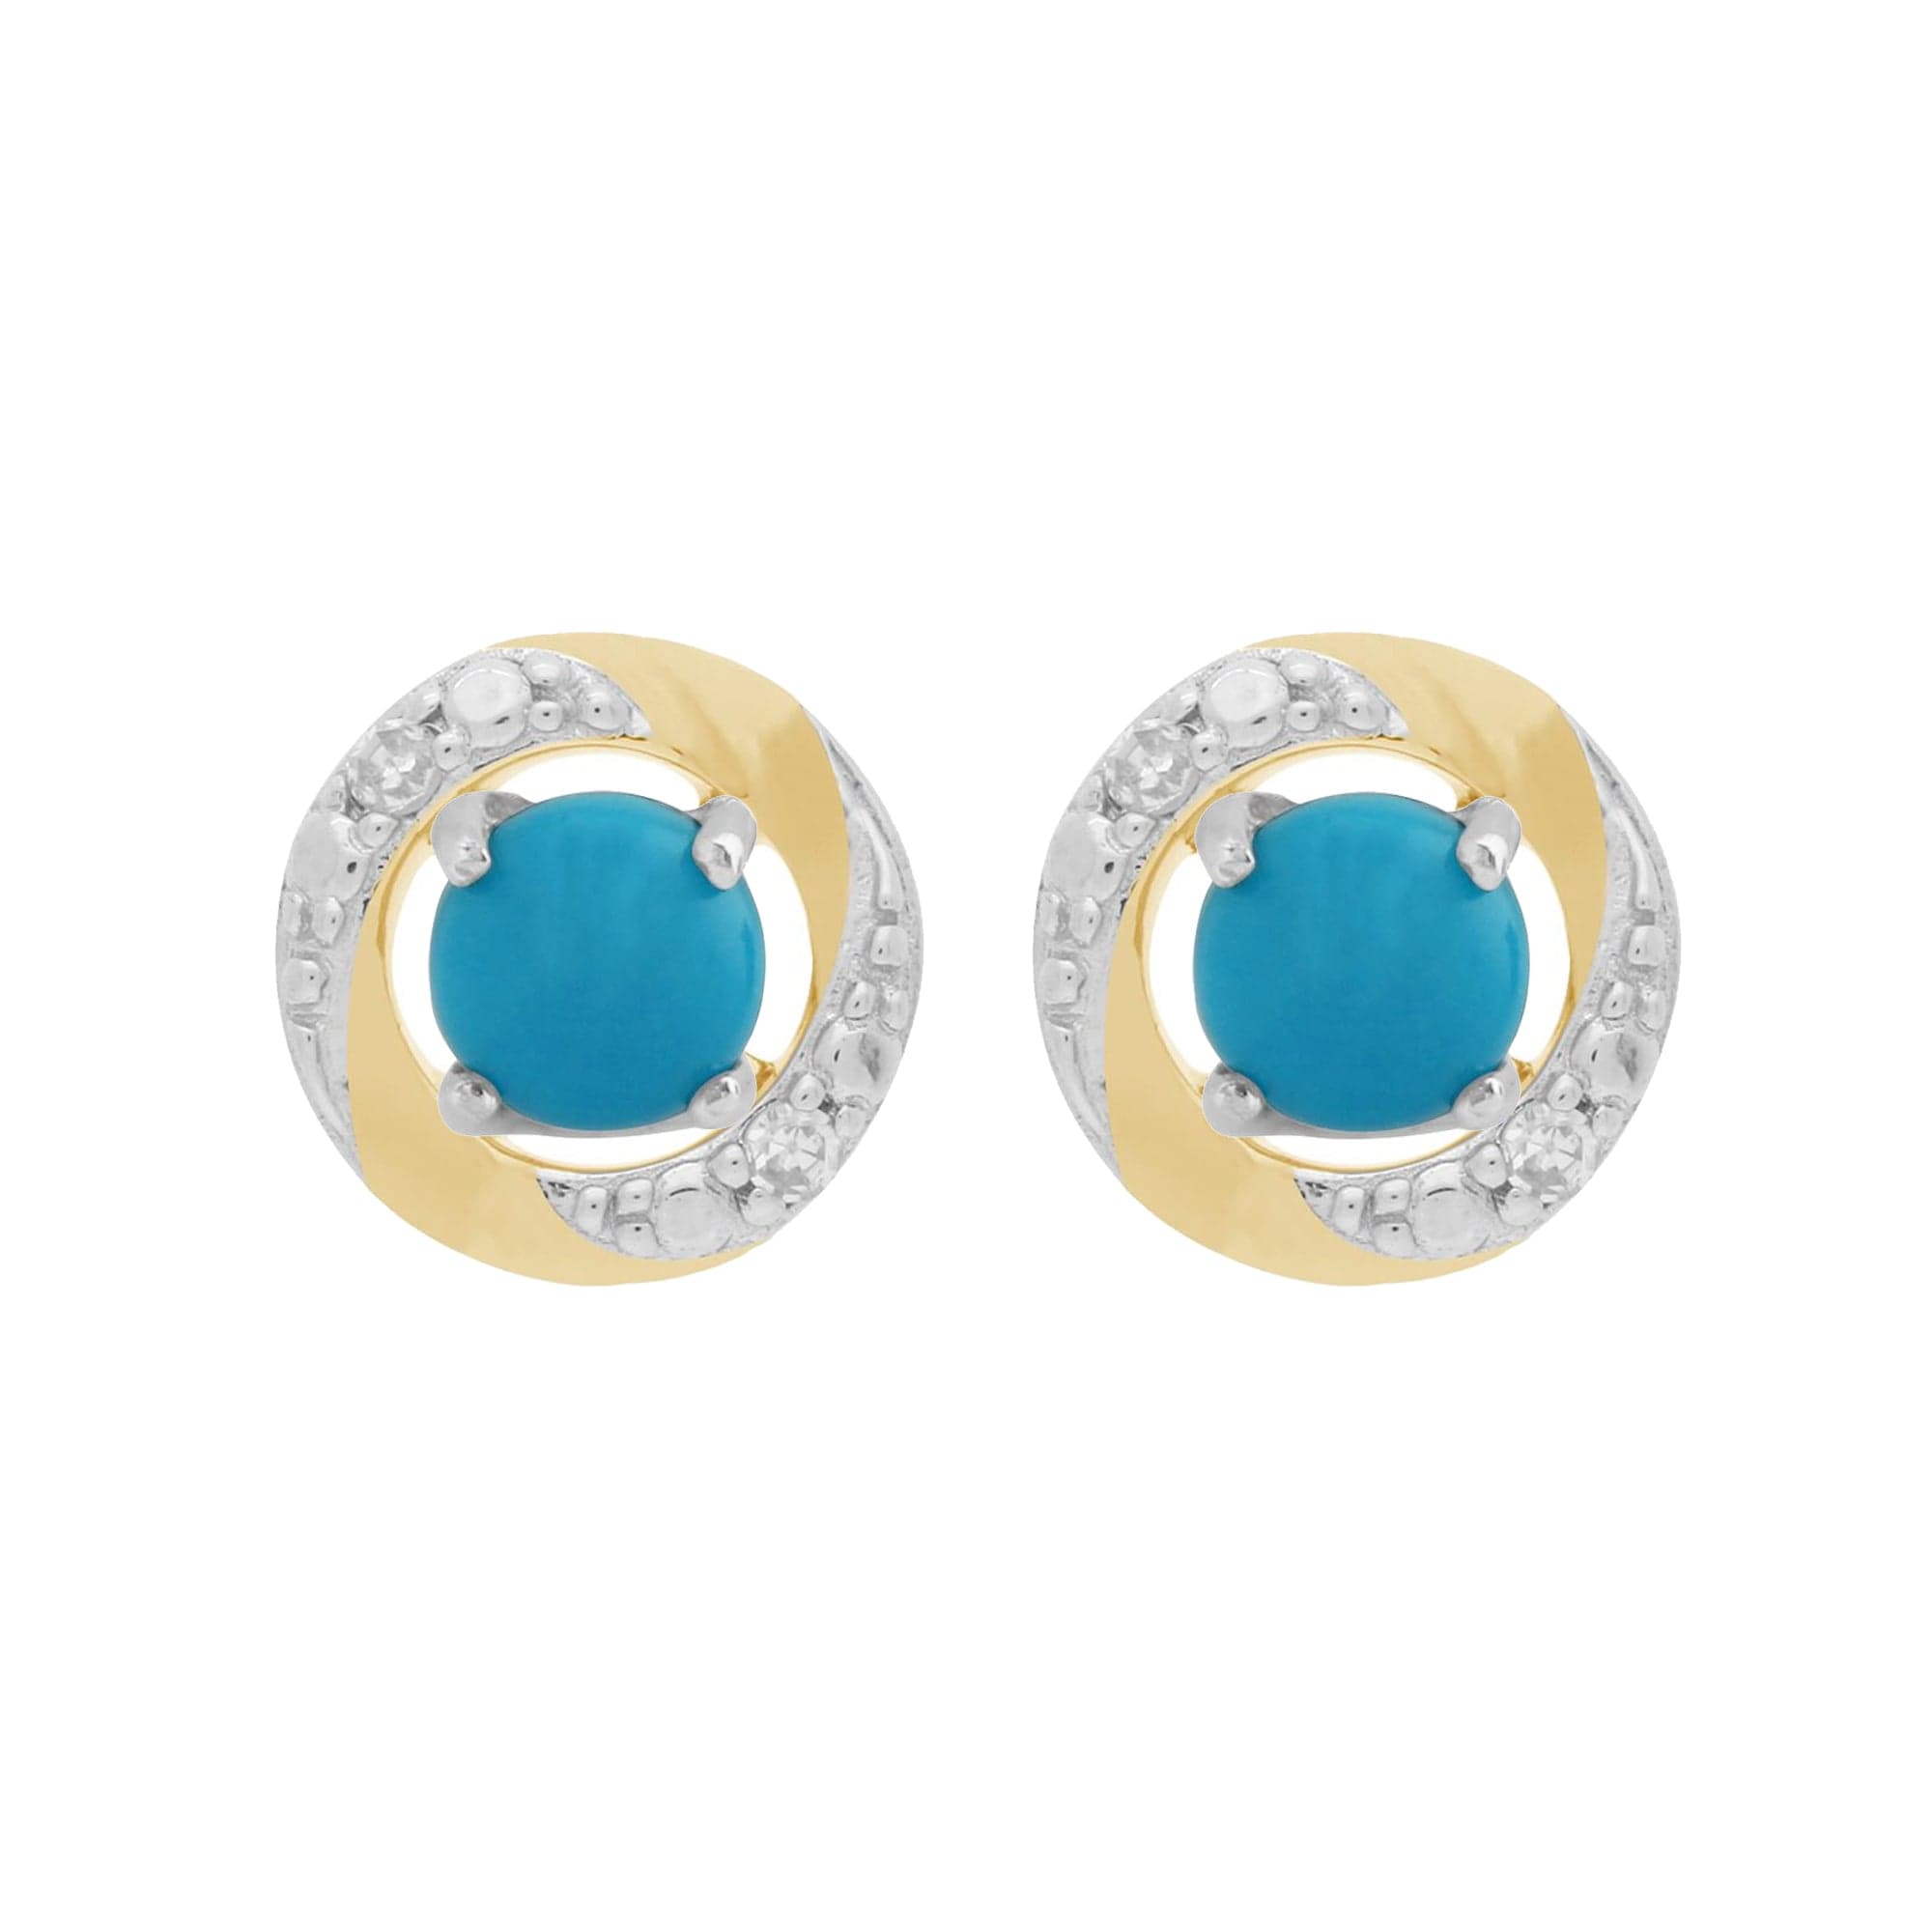 9ct White Gold Turquoise Stud Earrings & Diamond Halo Ear Jacket Image 1 